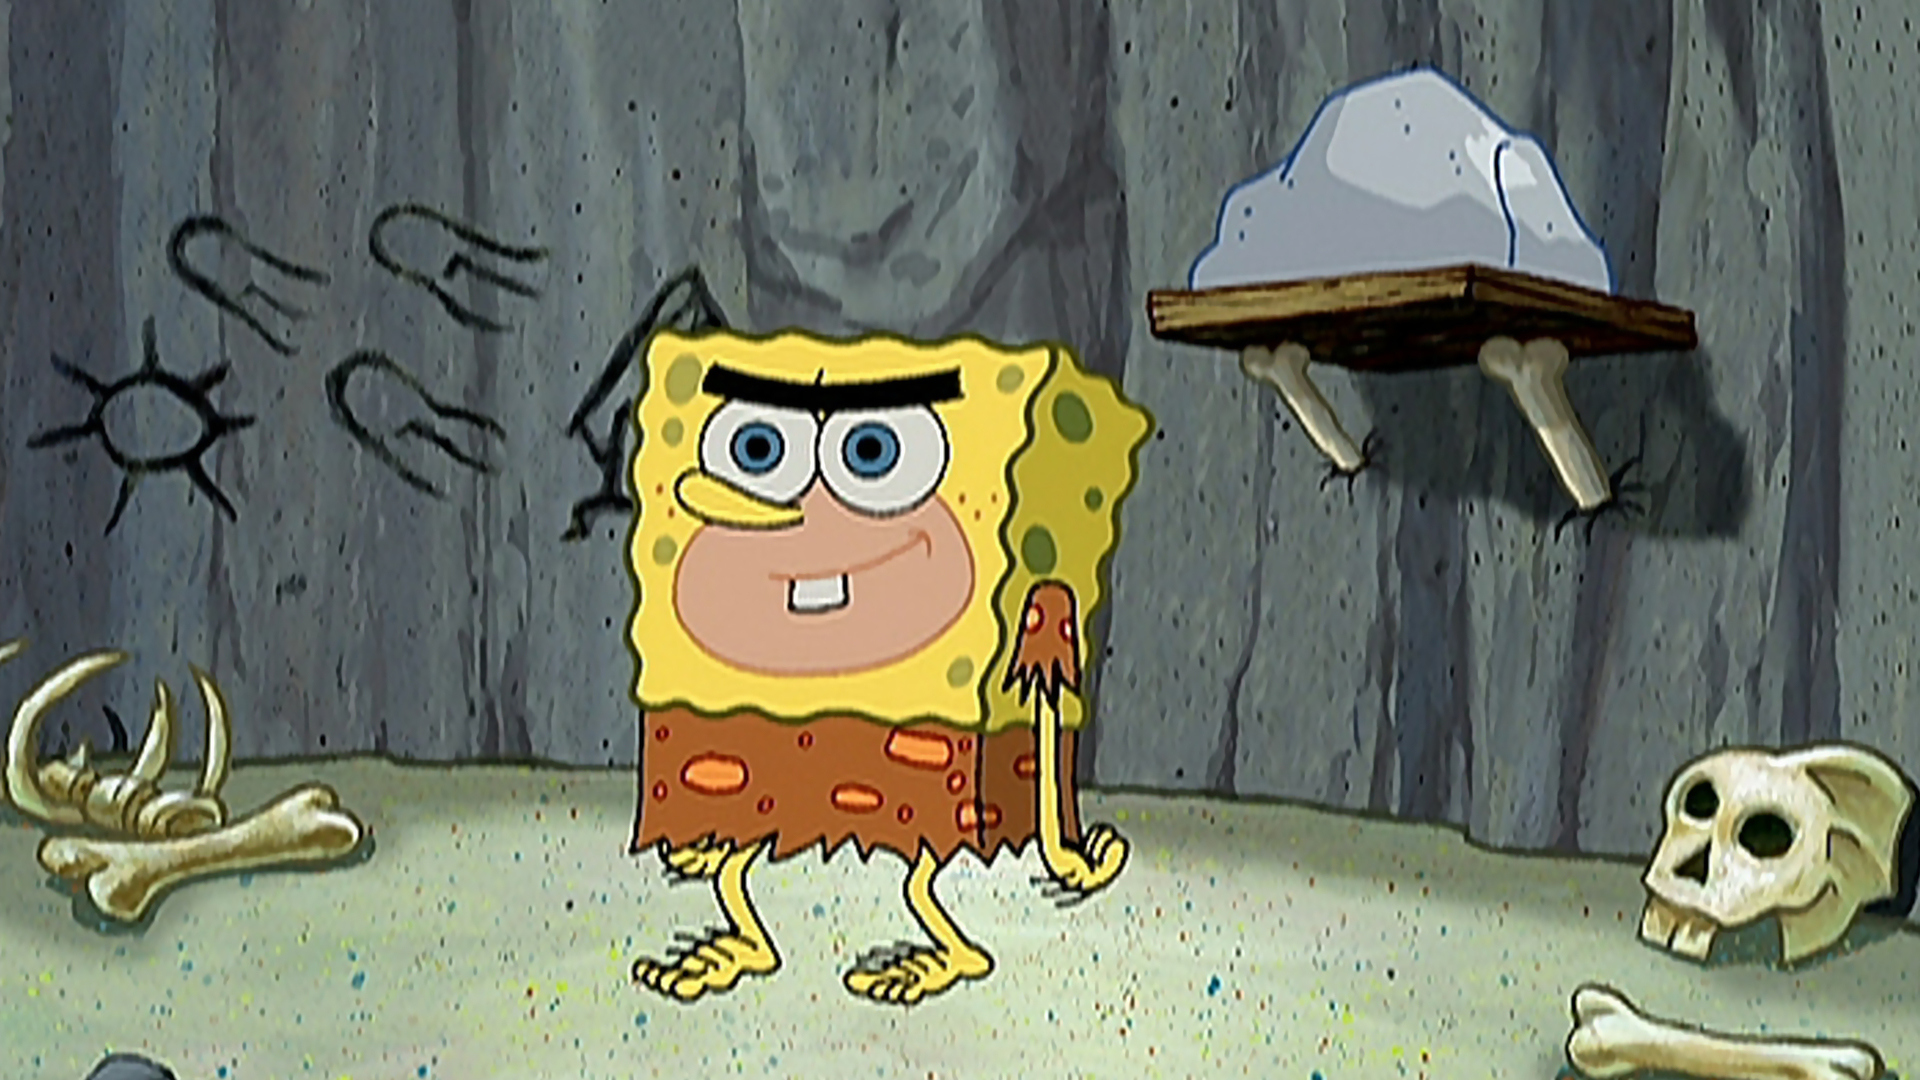 spongebob season 3 episodes